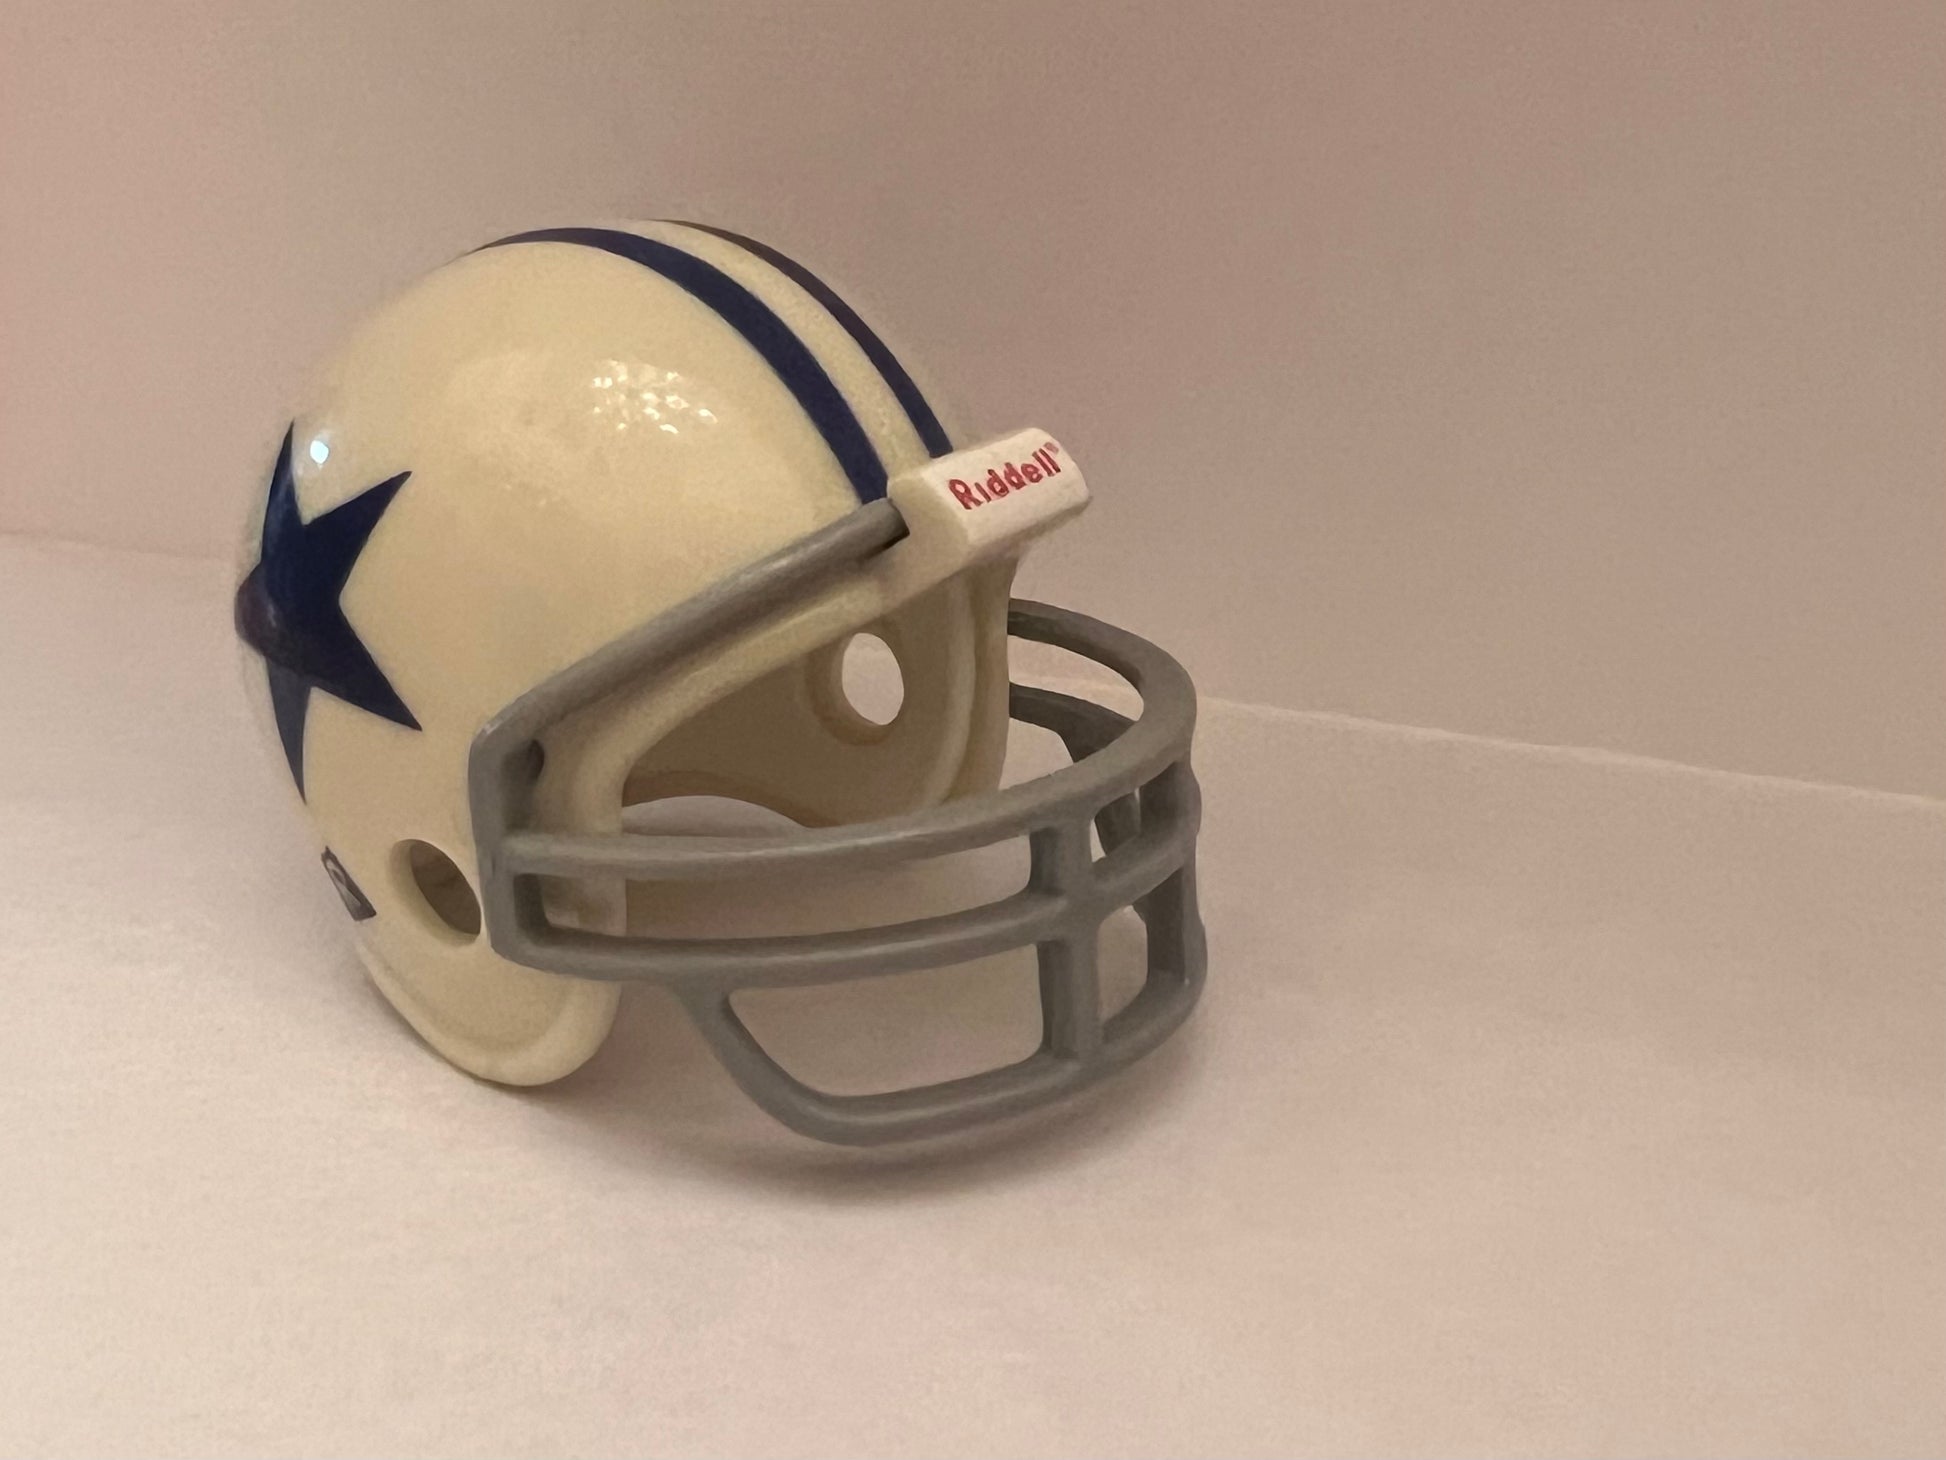 Houston Texans NFL Football Riddell Pocket Pro Helmet